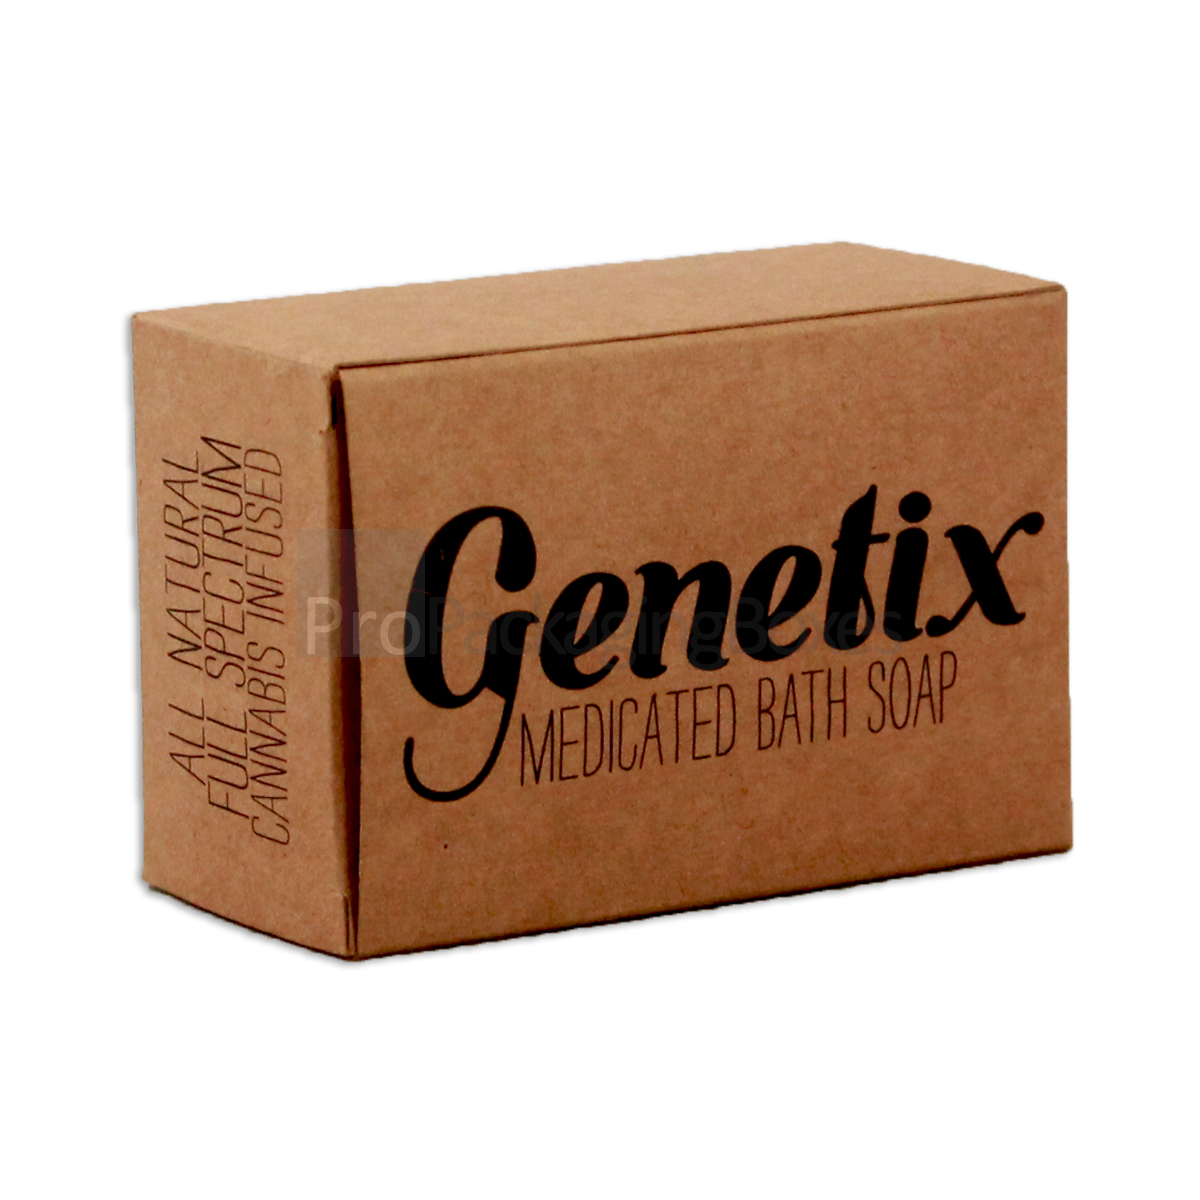 Custom Printed Soap Packaging Boxes in kraft card stock